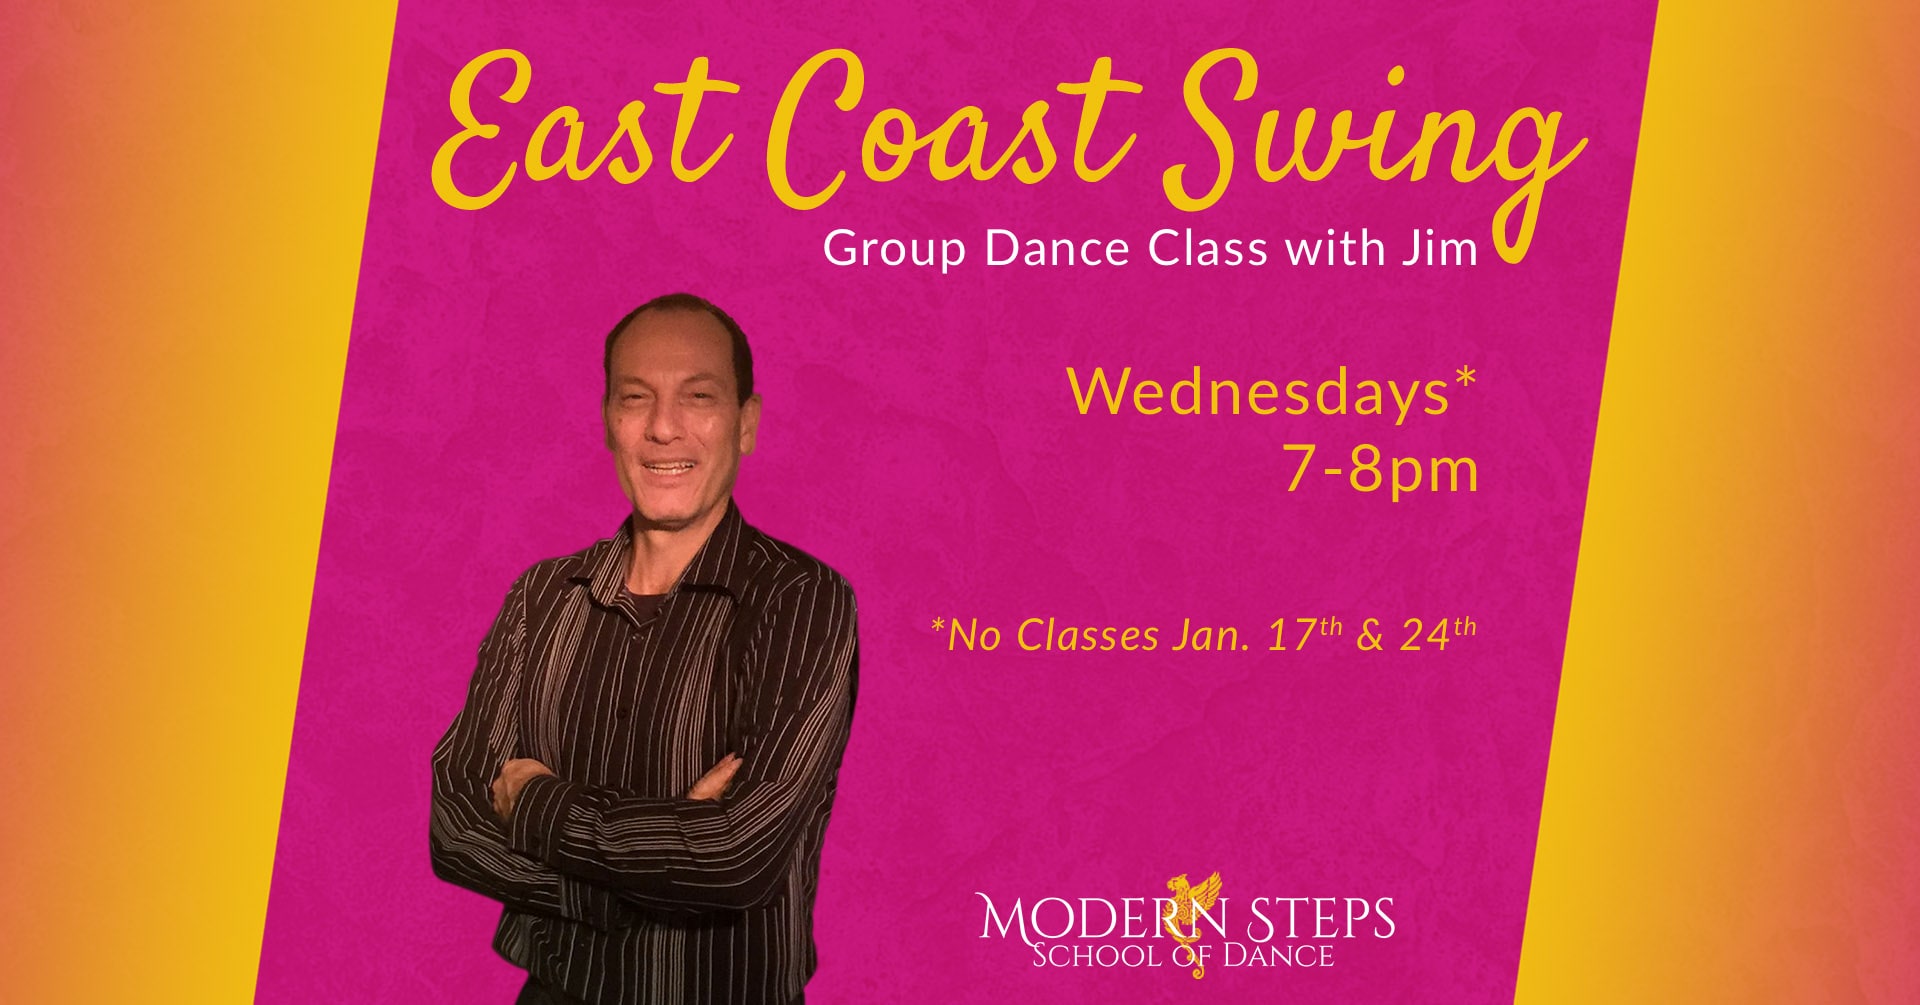 Naples Ballroom Dance Lessons - East Coast Swing - Modern Steps School of Dance - Naples Florida - Naples Florida Things to Do